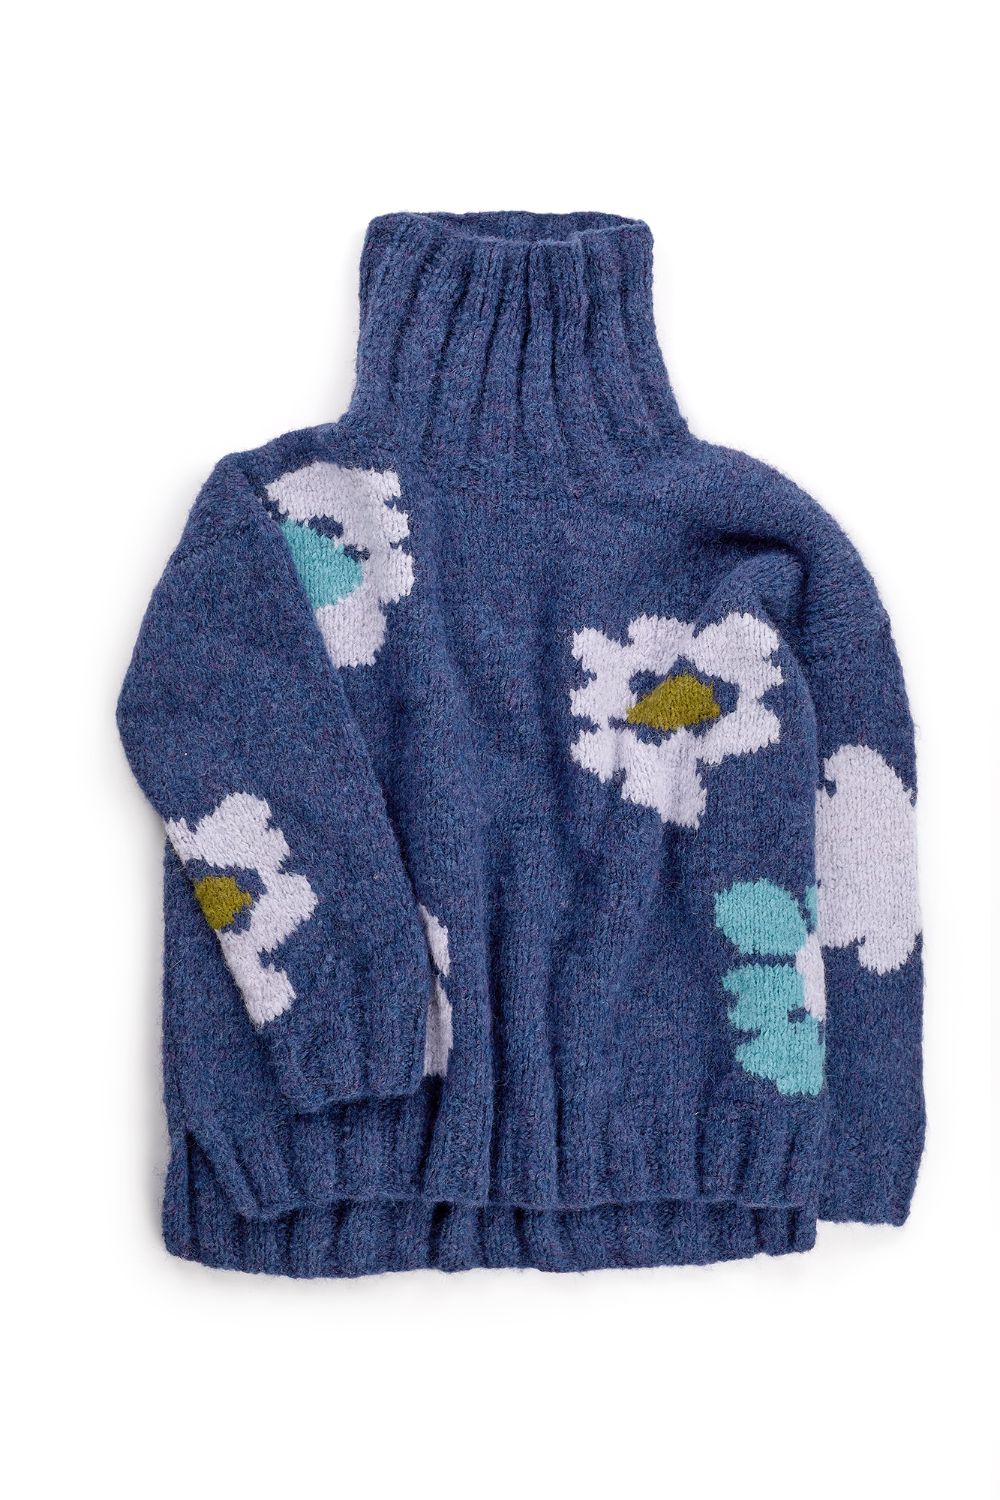 amano hand knit alpaca jumper sweater purple for women detail shot